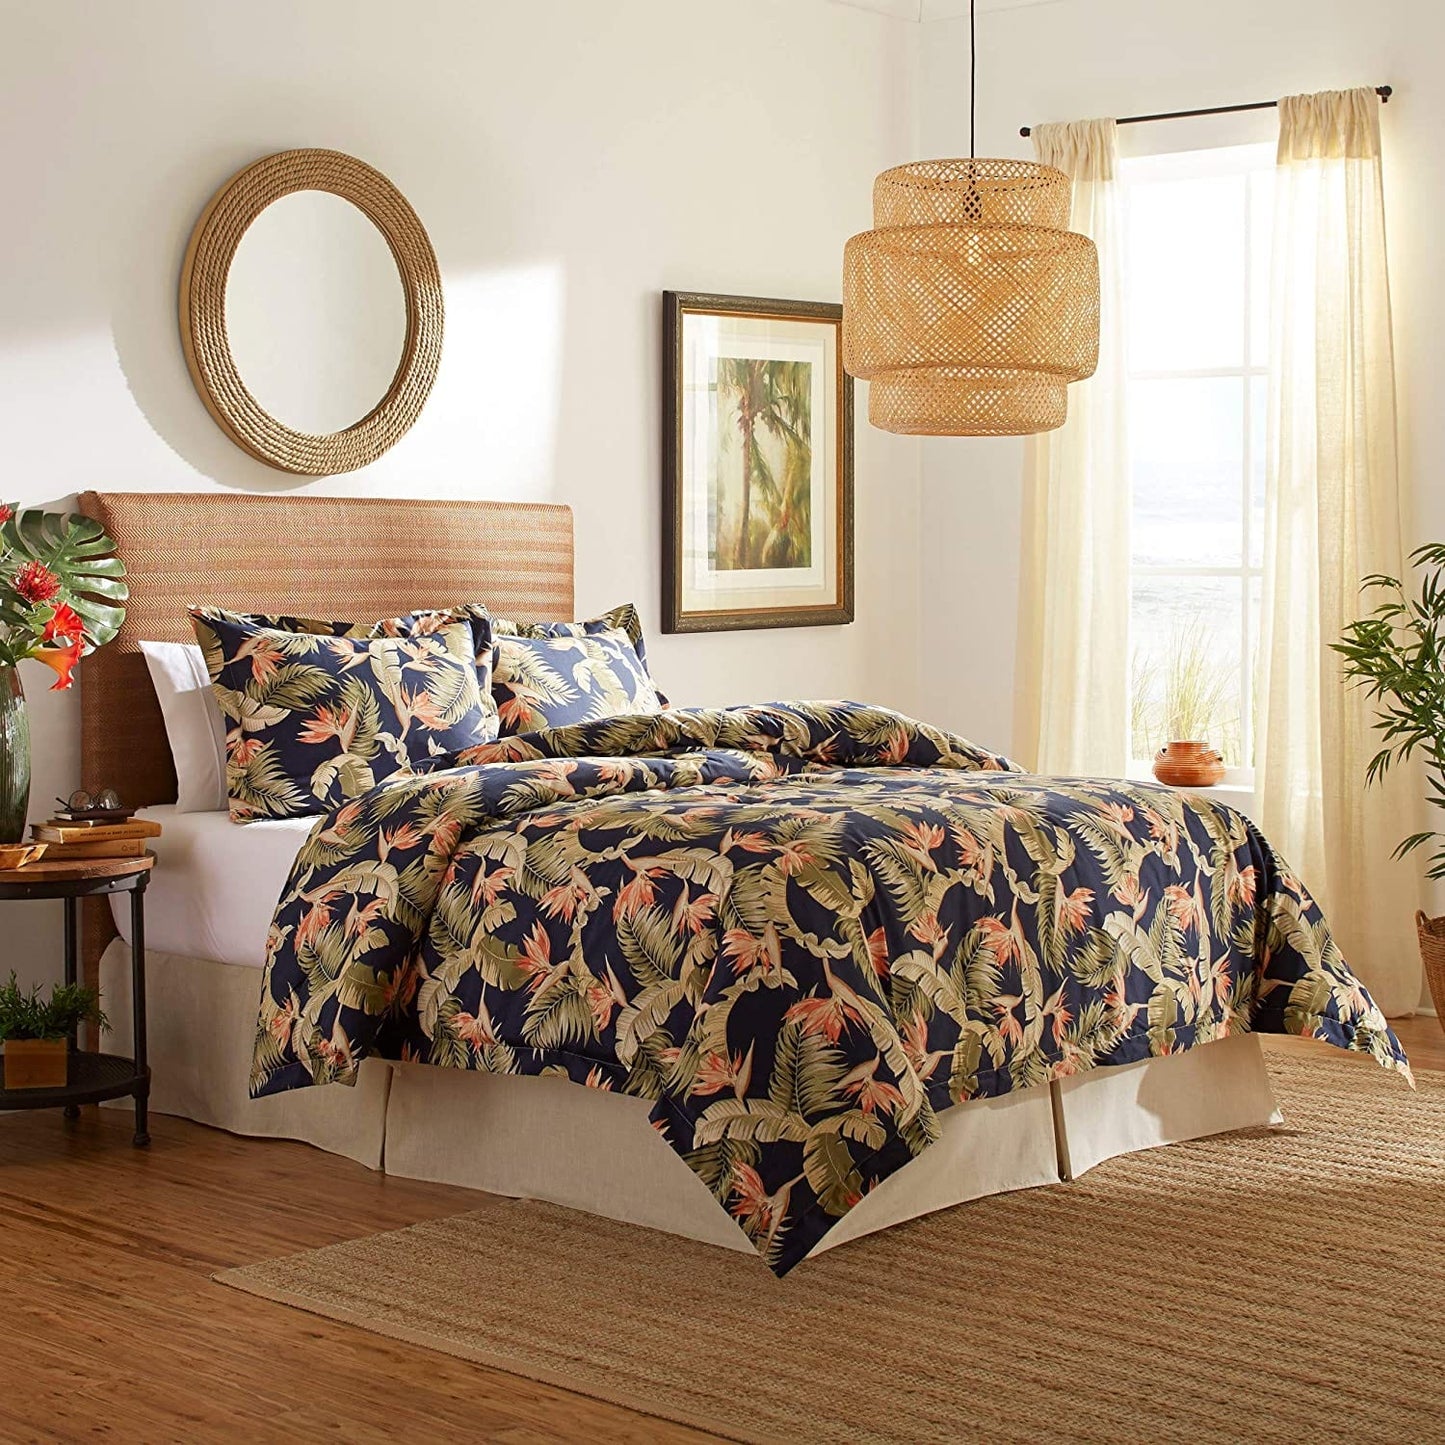 TOMMY BAHAMA Comforter/Quilt/Duvet King- 279cm x 244cm / Indigo San Jacinto Comforter Set - 4 Pieces